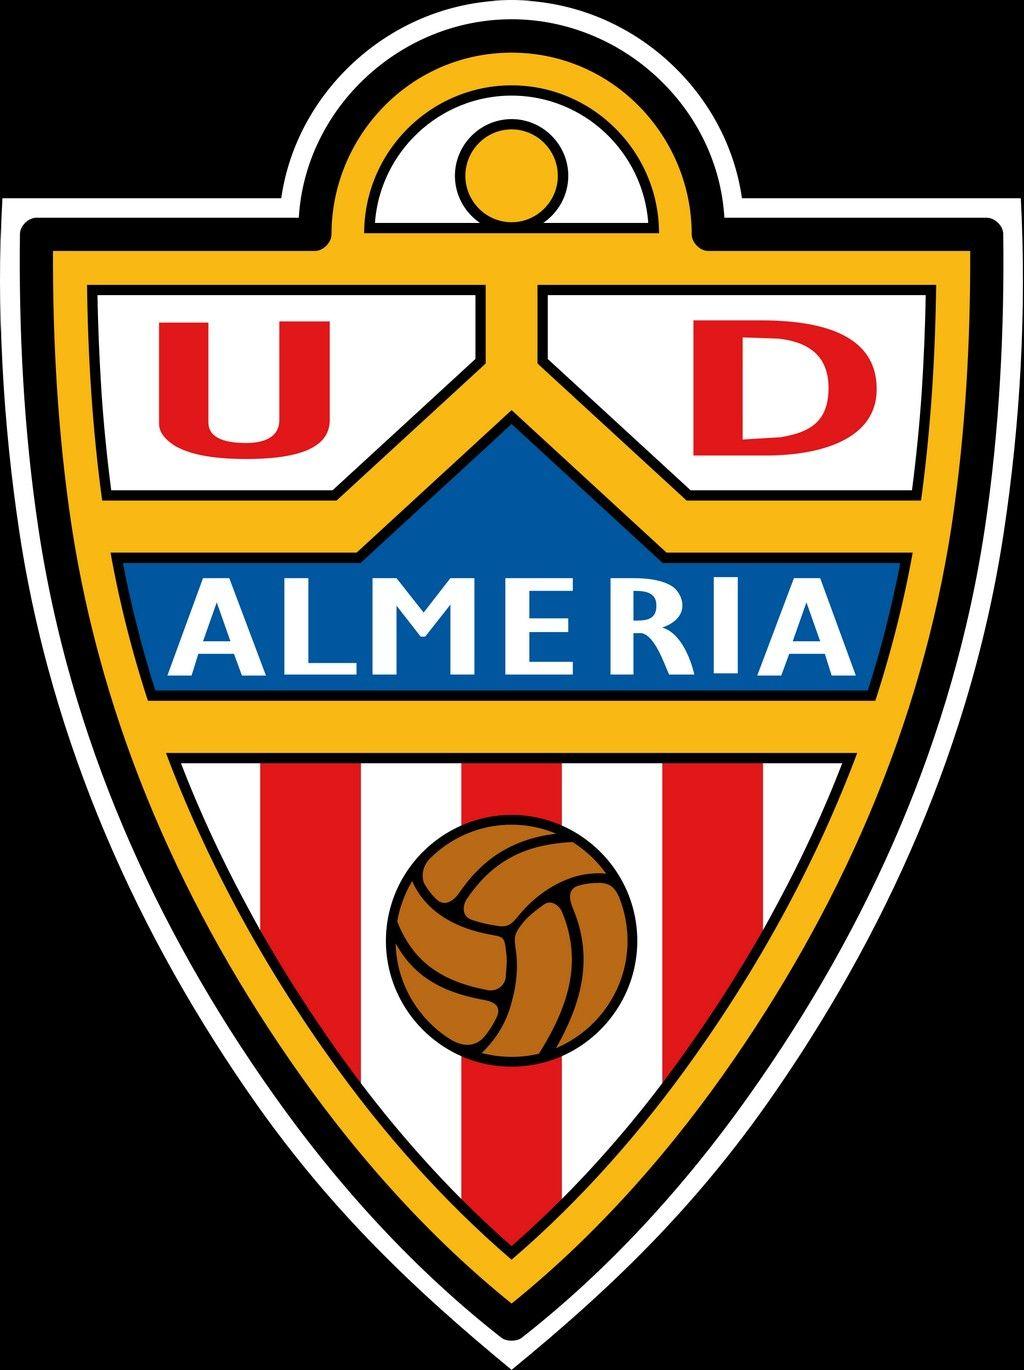 ud almeria logo wallpaper bilder, ud almeria logo wallpaperbild